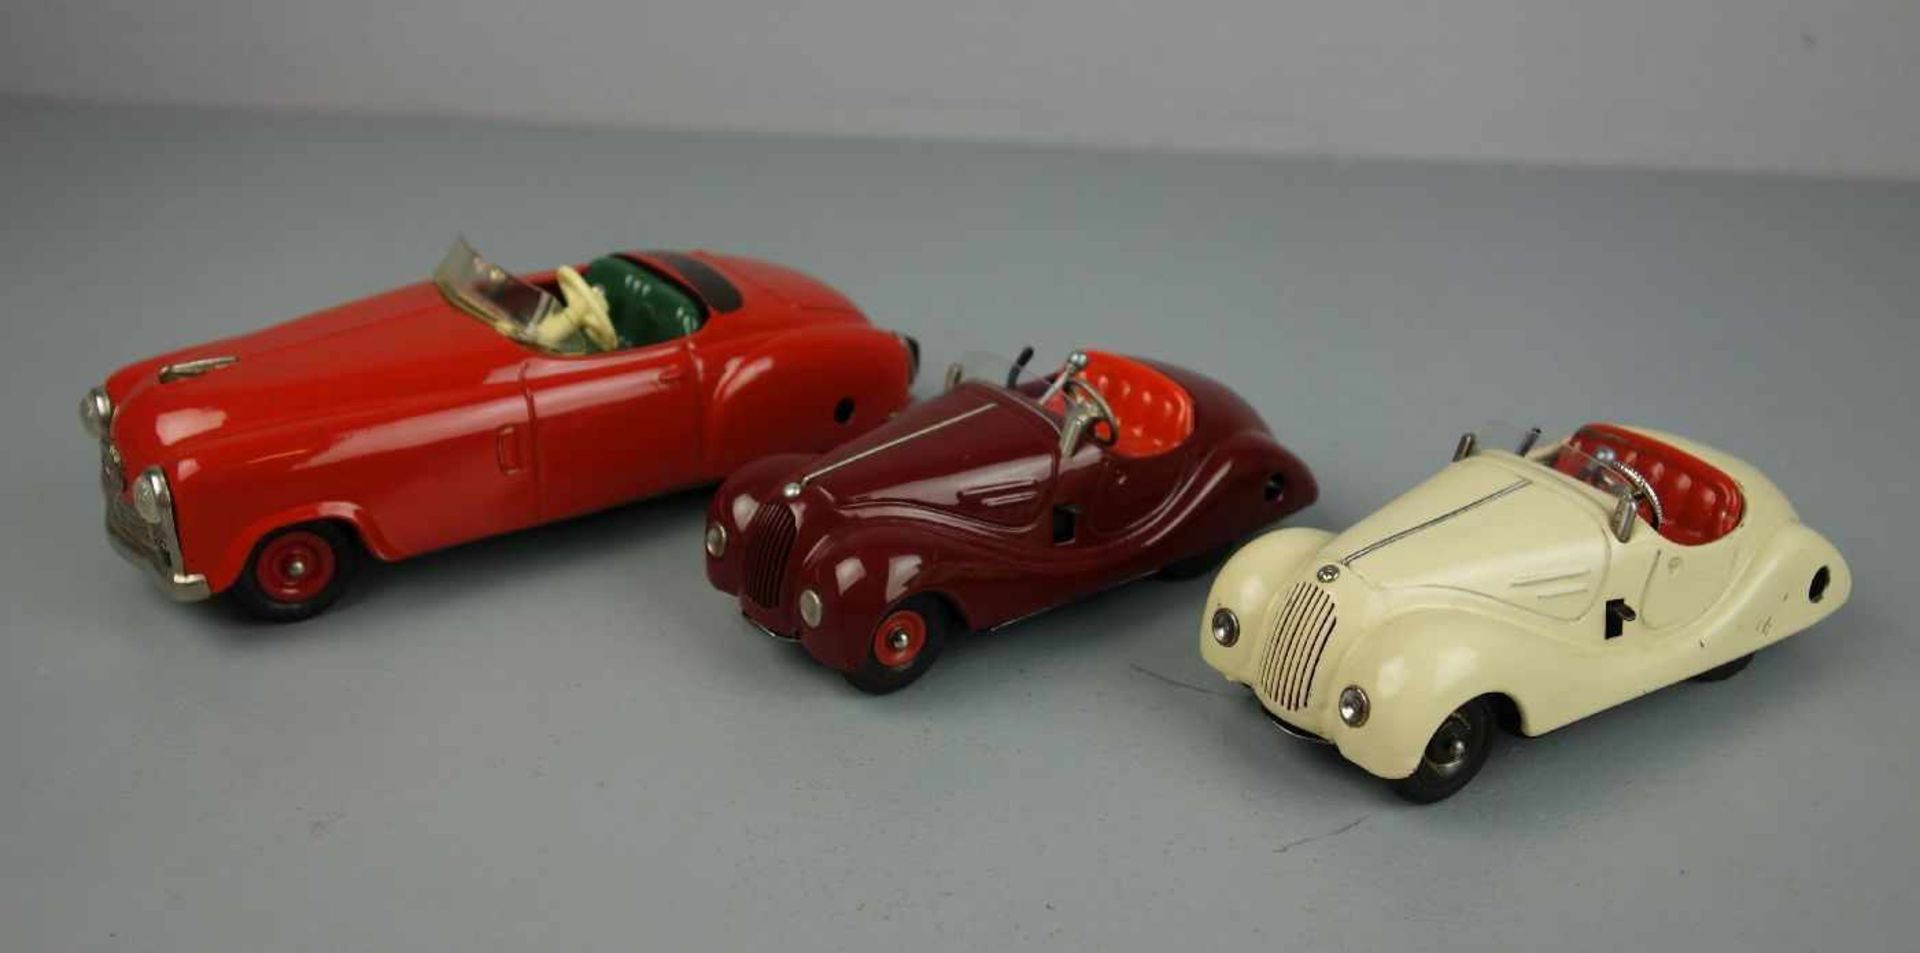 BLECHSPIELZEUGE / FAHRZEUGE: 3 Examico Autos / tin toy cars, Mitte 20. Jh., Manufaktur Schuco /